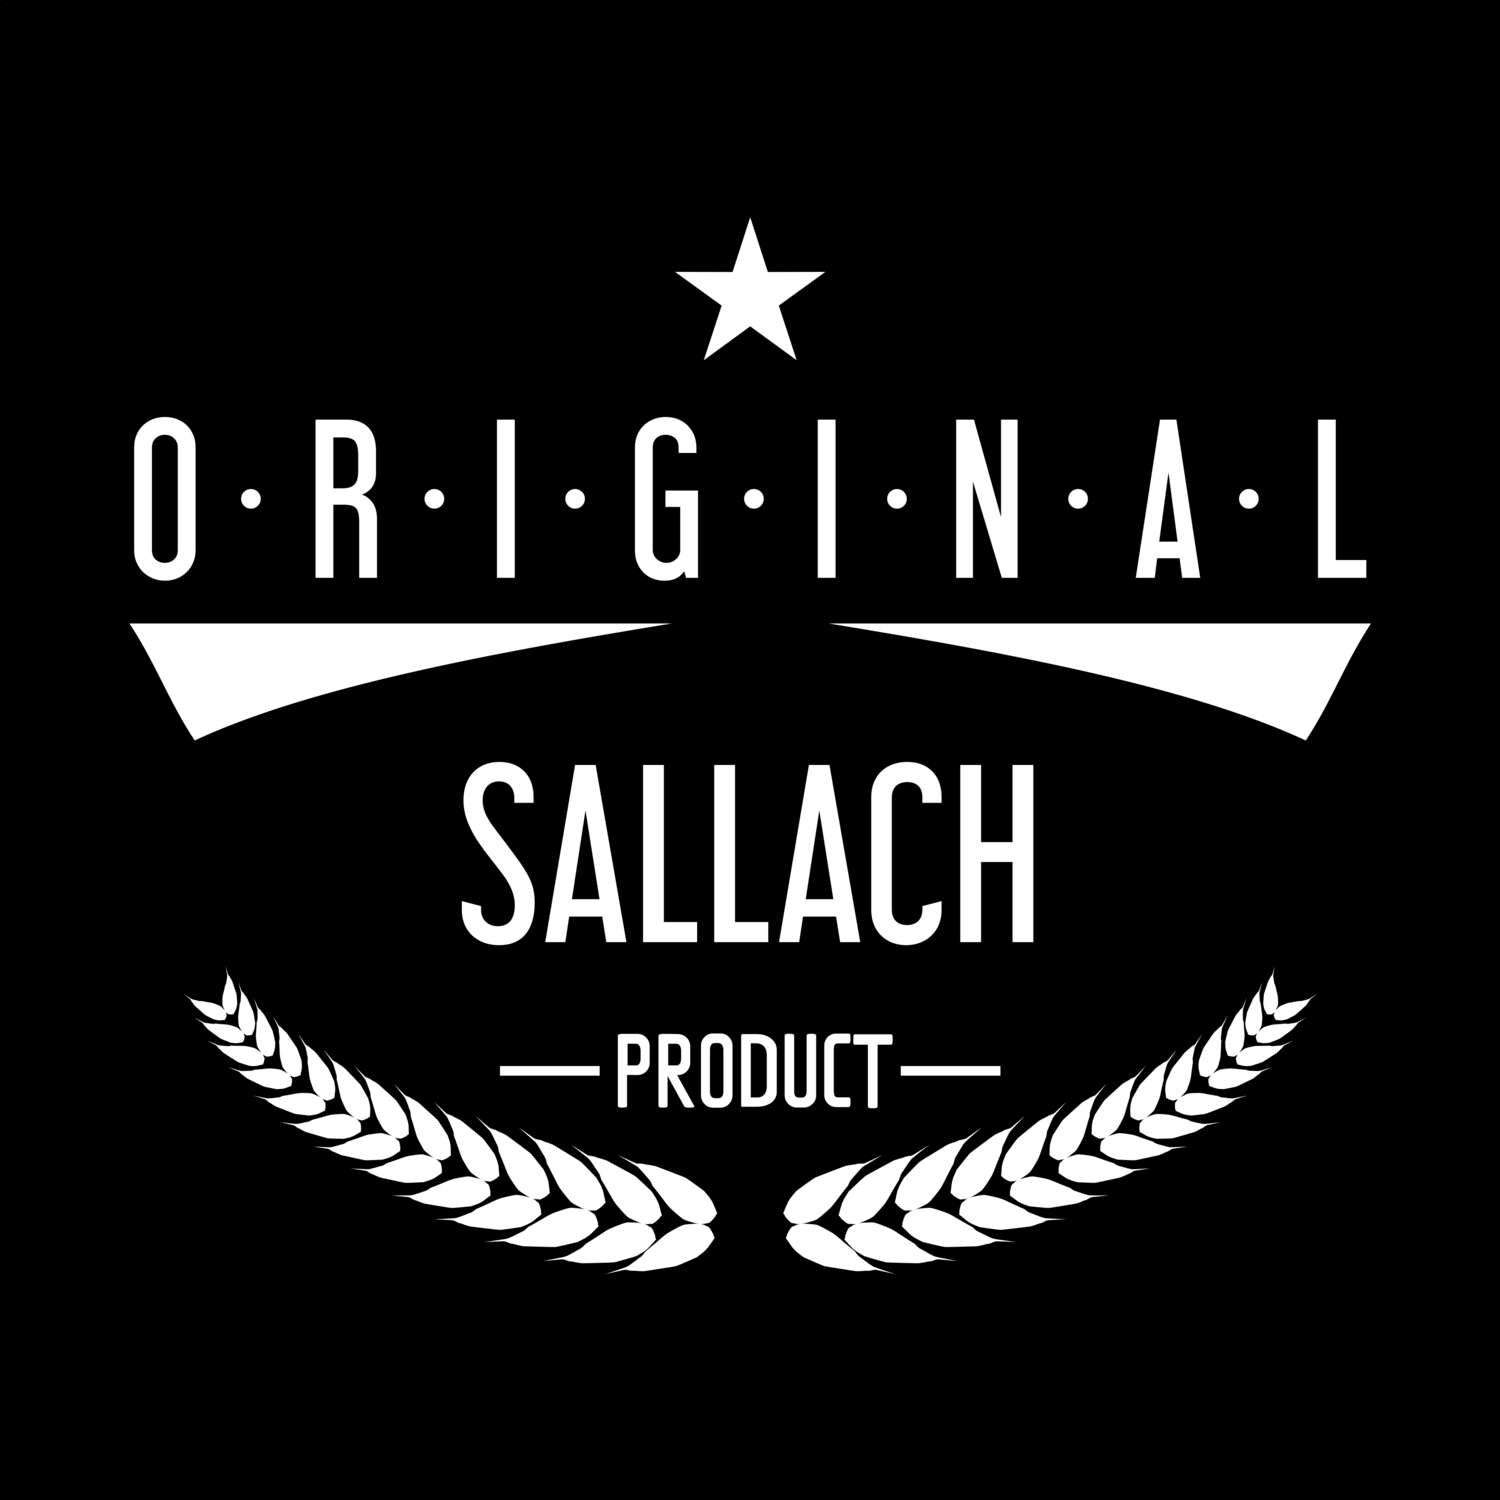 Sallach T-Shirt »Original Product«